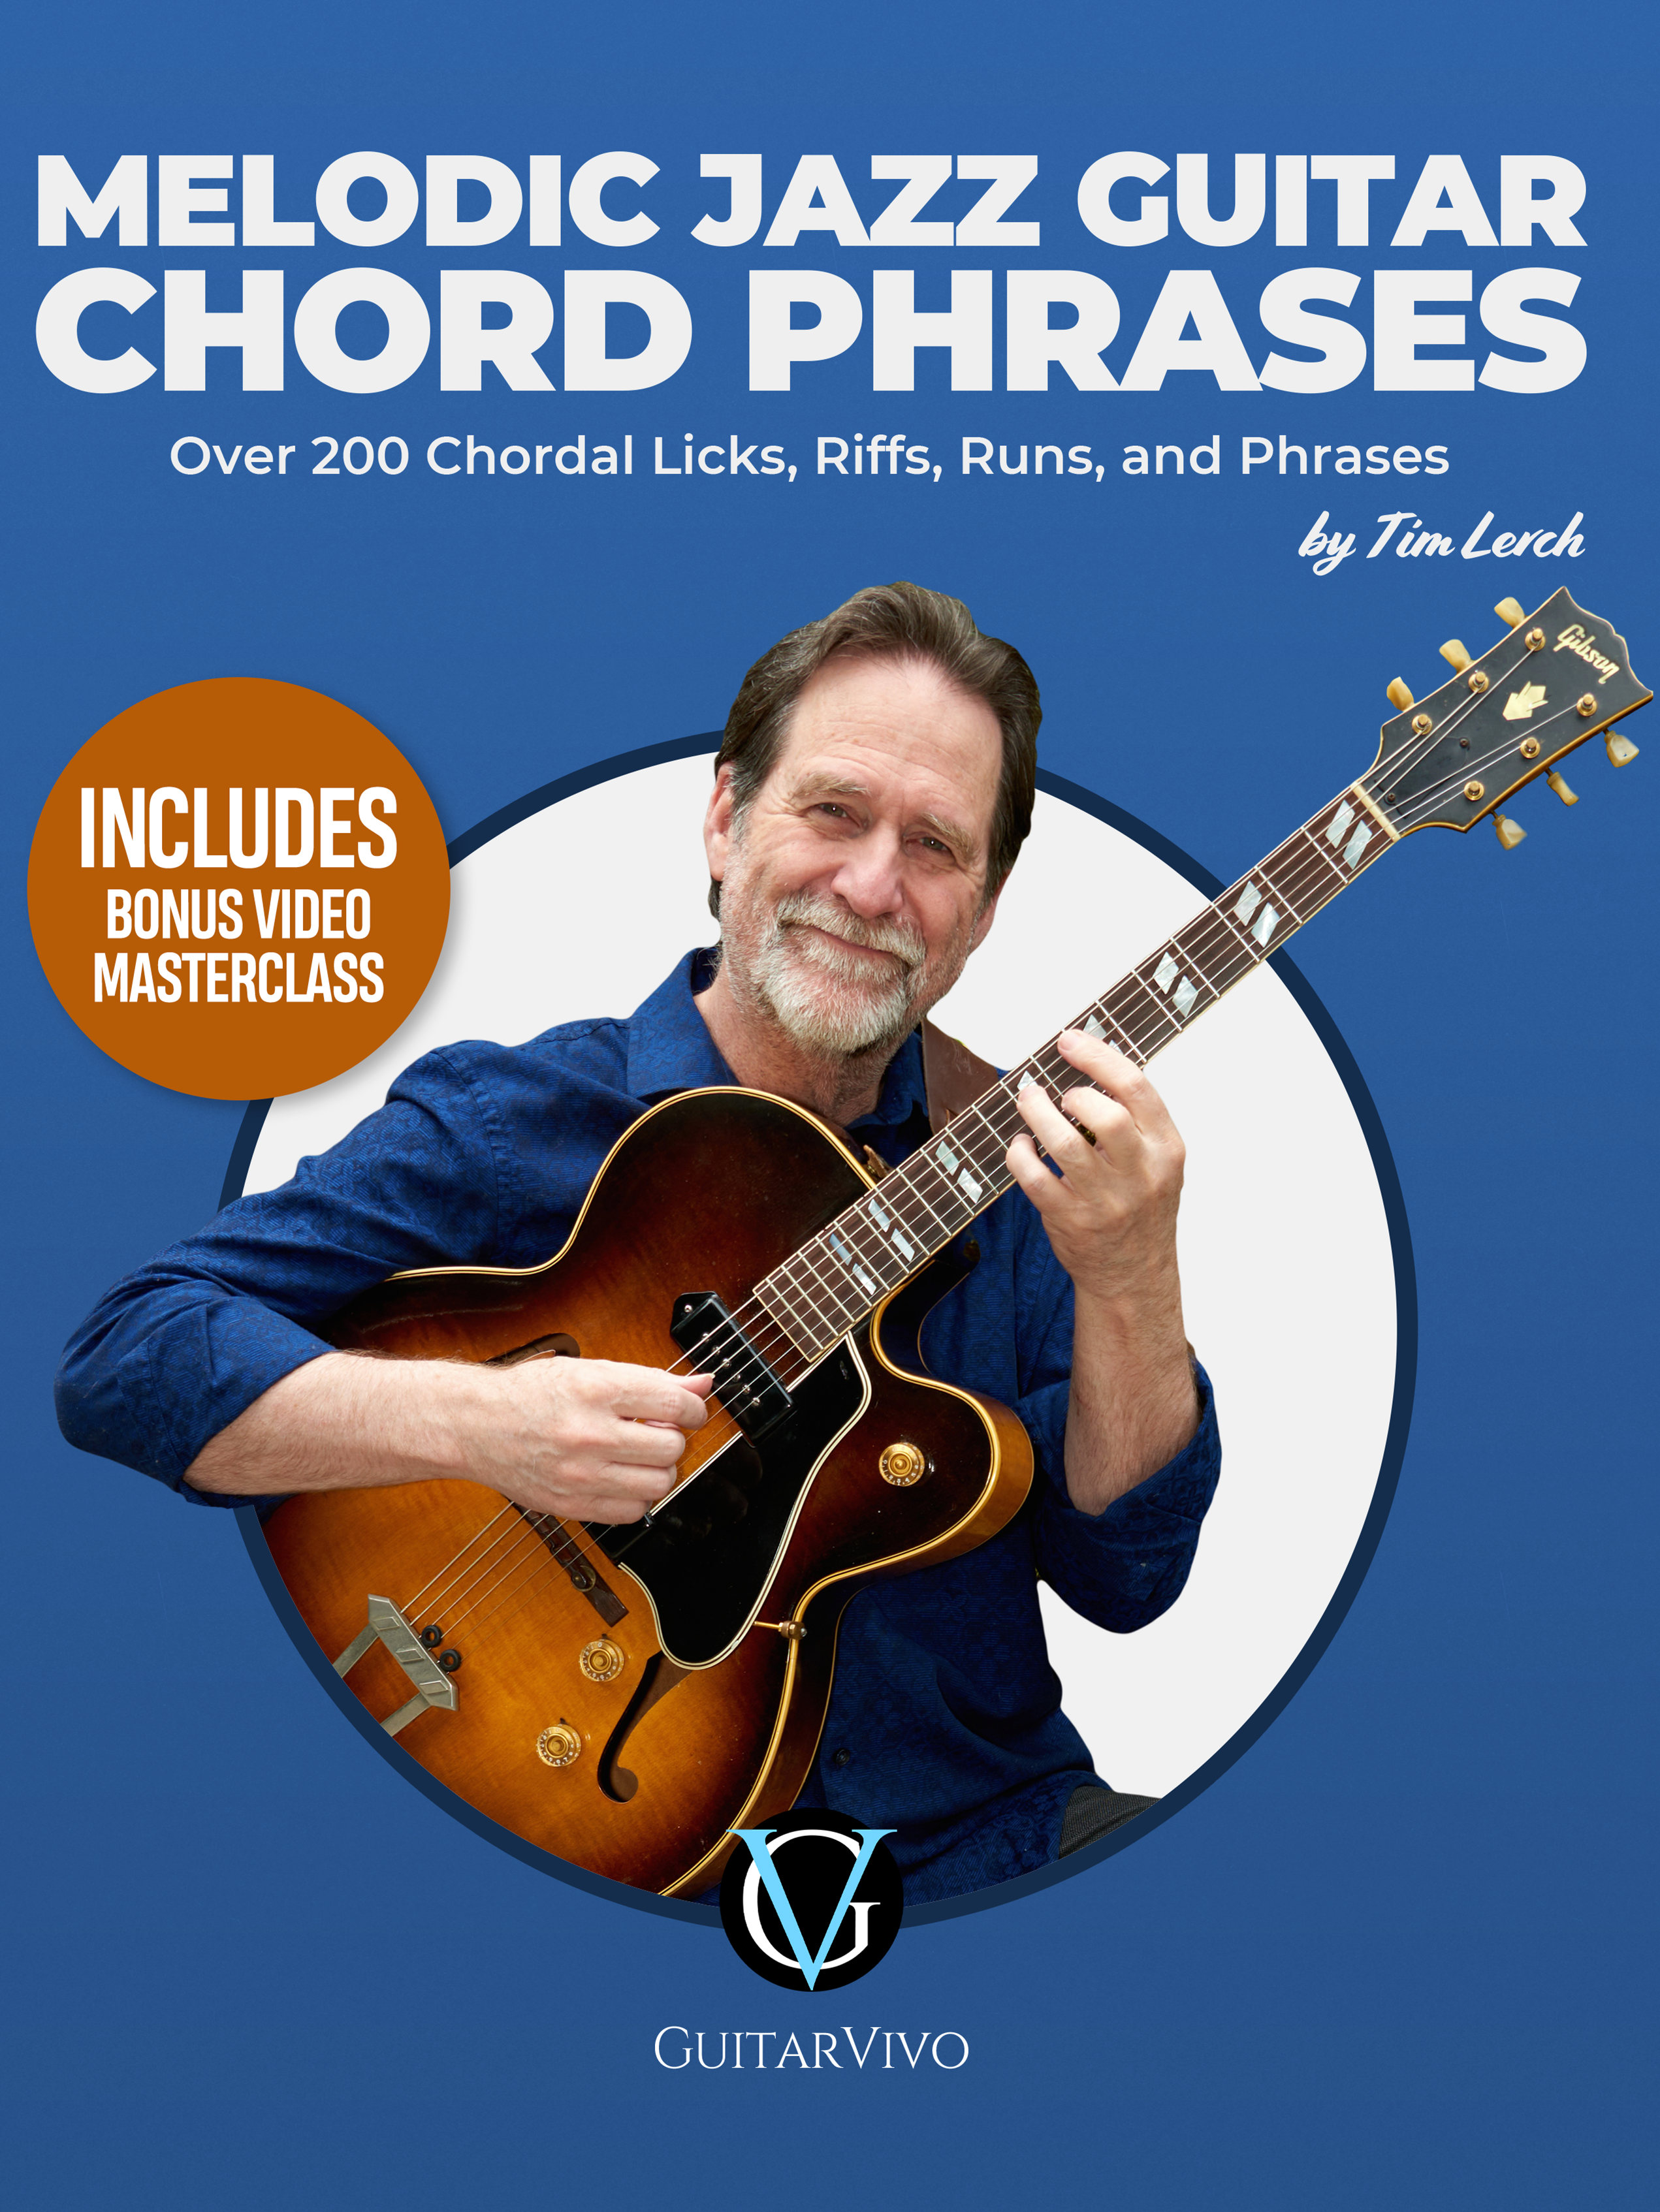 Melodic Jazz Guitar Chord Phrases by Tim Lerch - PDF - GuitarVivo